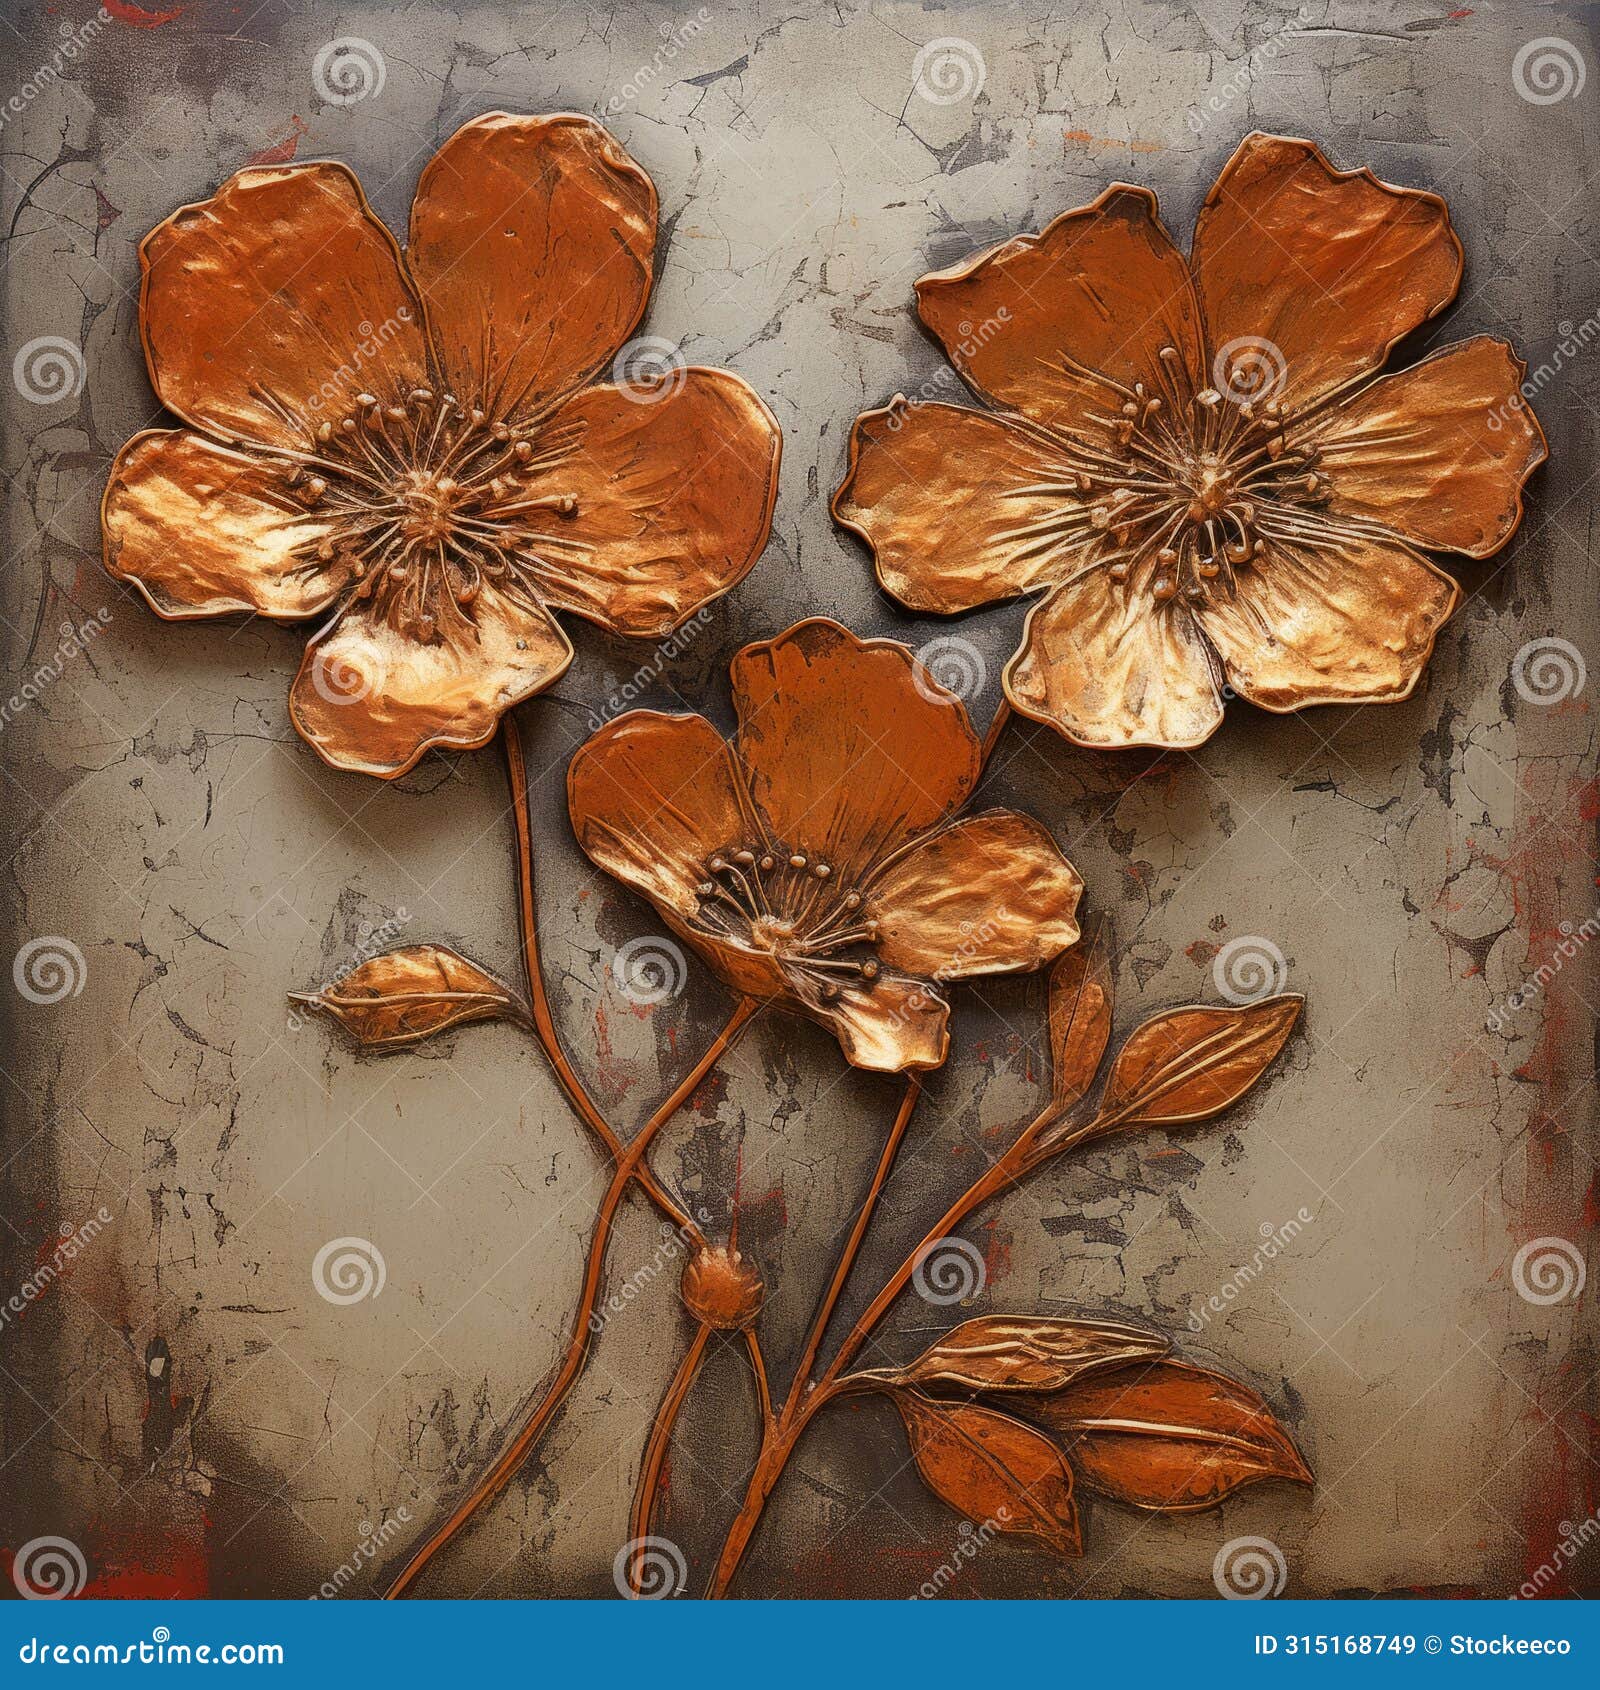 copper flower wall art: dark beige and bronze oil paintings